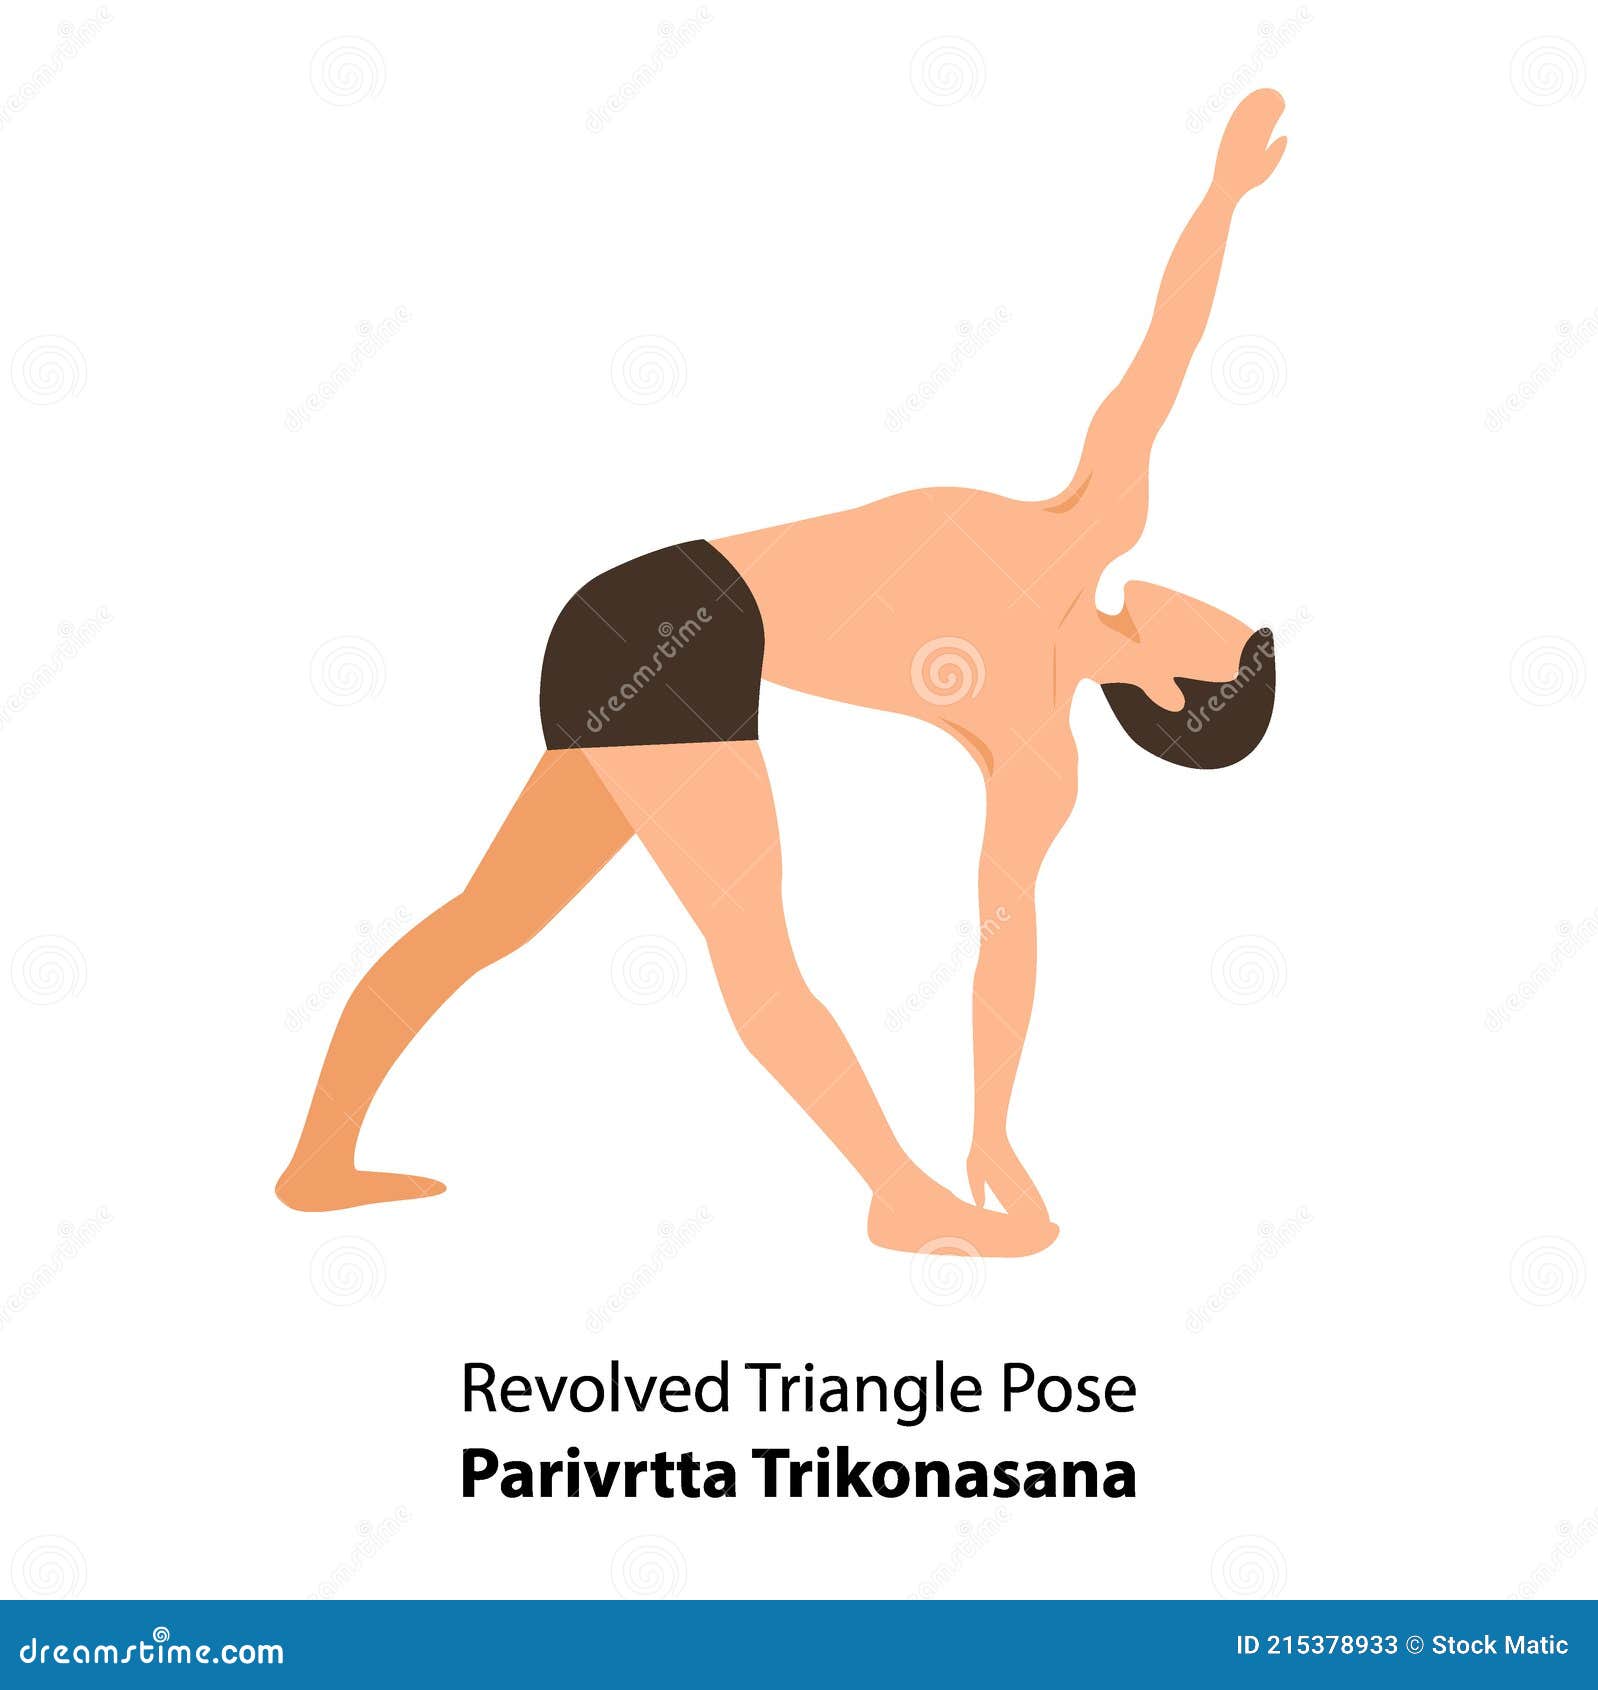 Yoga Revolved Triangle Pose On The Beach Parivrtta Trikonasana Stock Photo  - Download Image Now - iStock